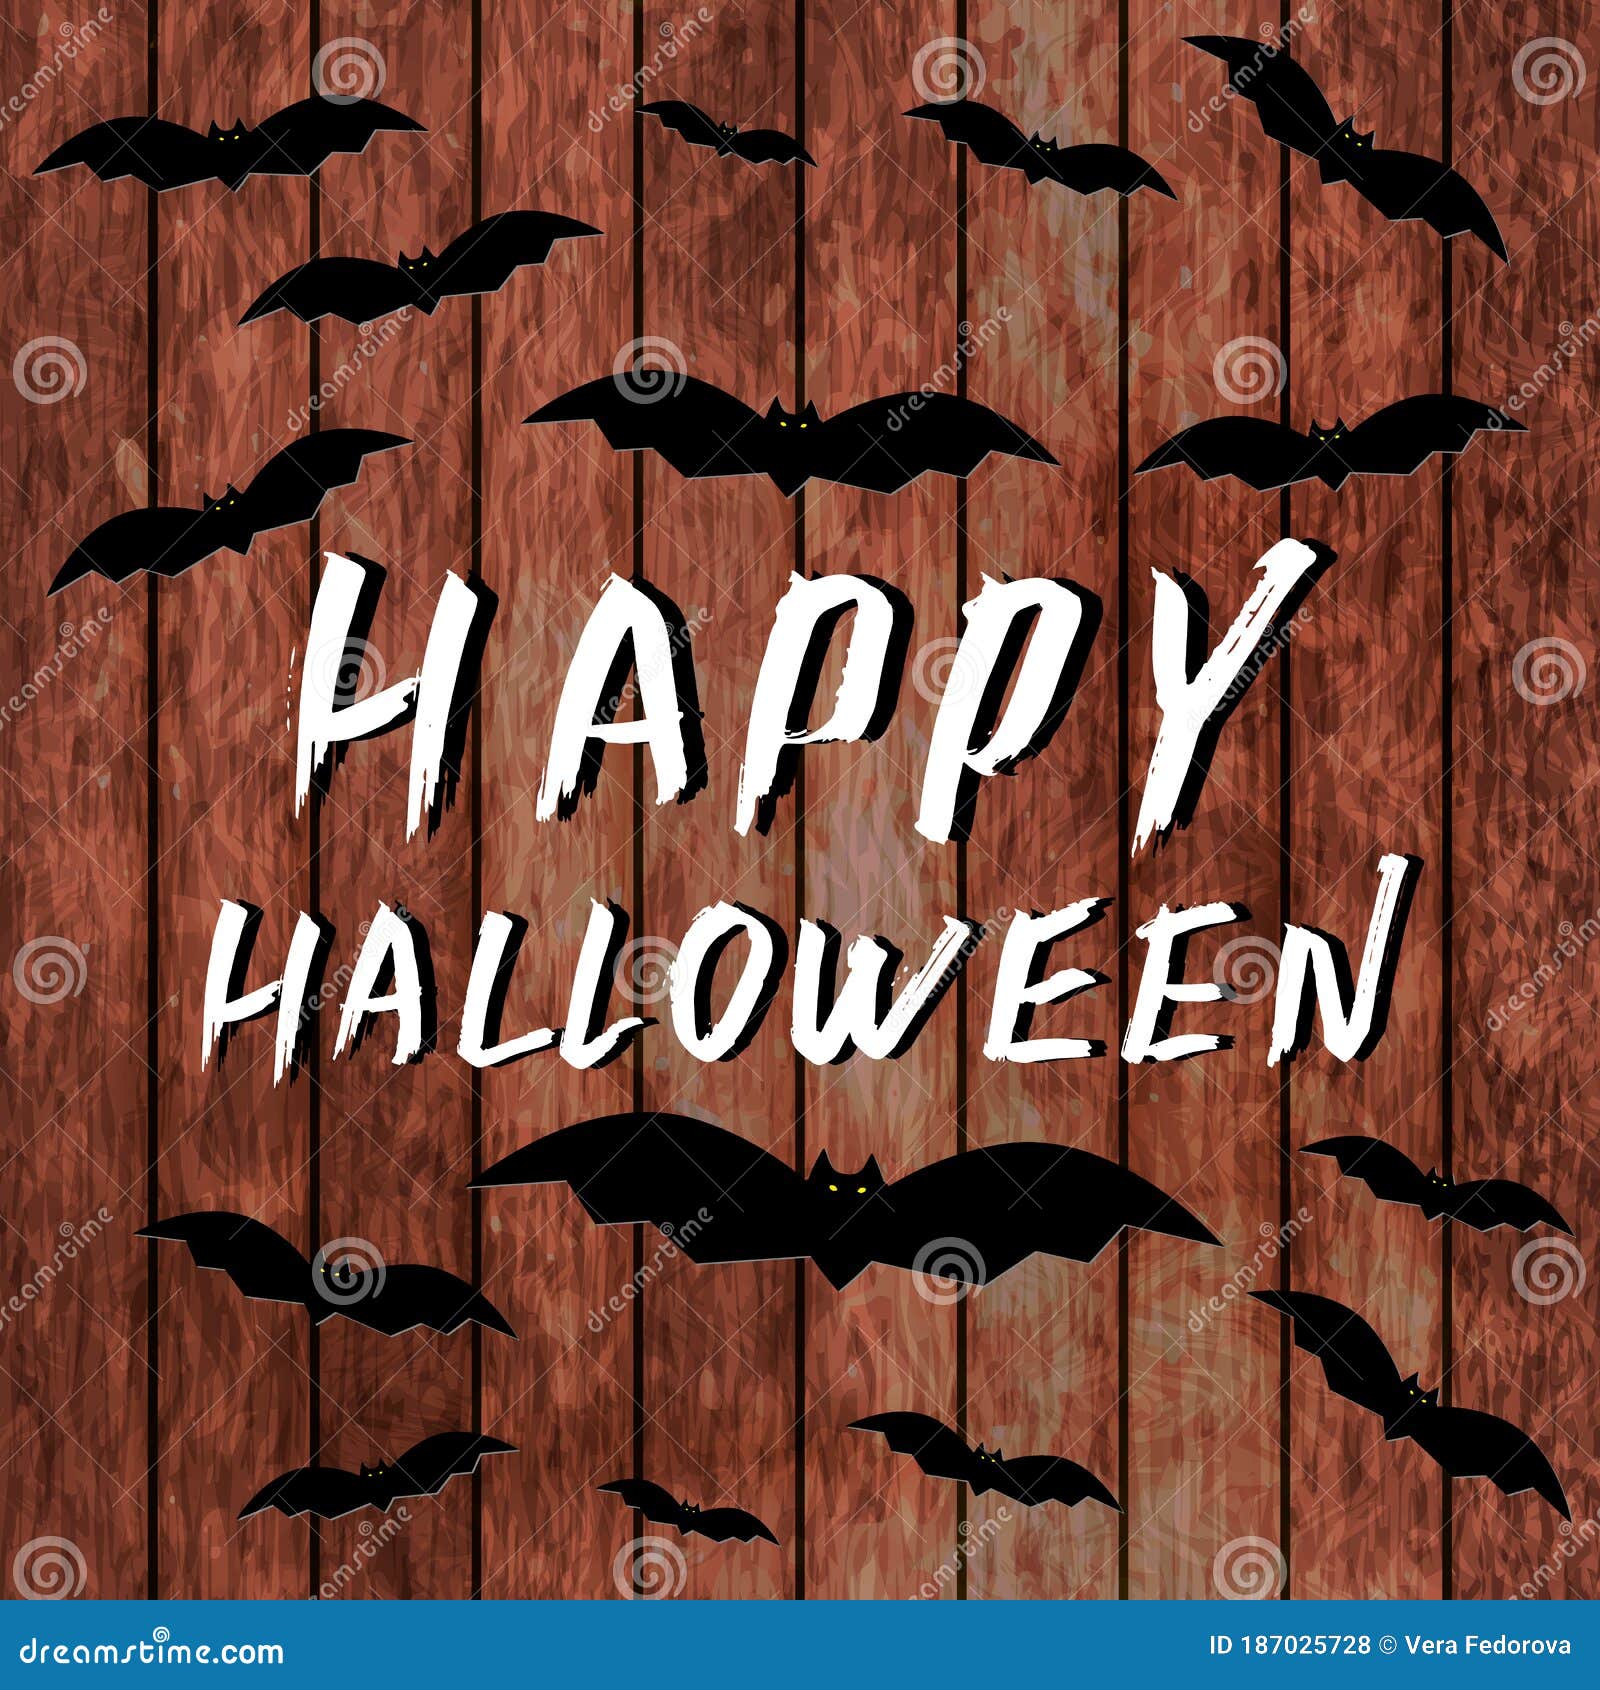 Banner De Texto Halloween Feliz Com Estilo De Pincel Isolado Em